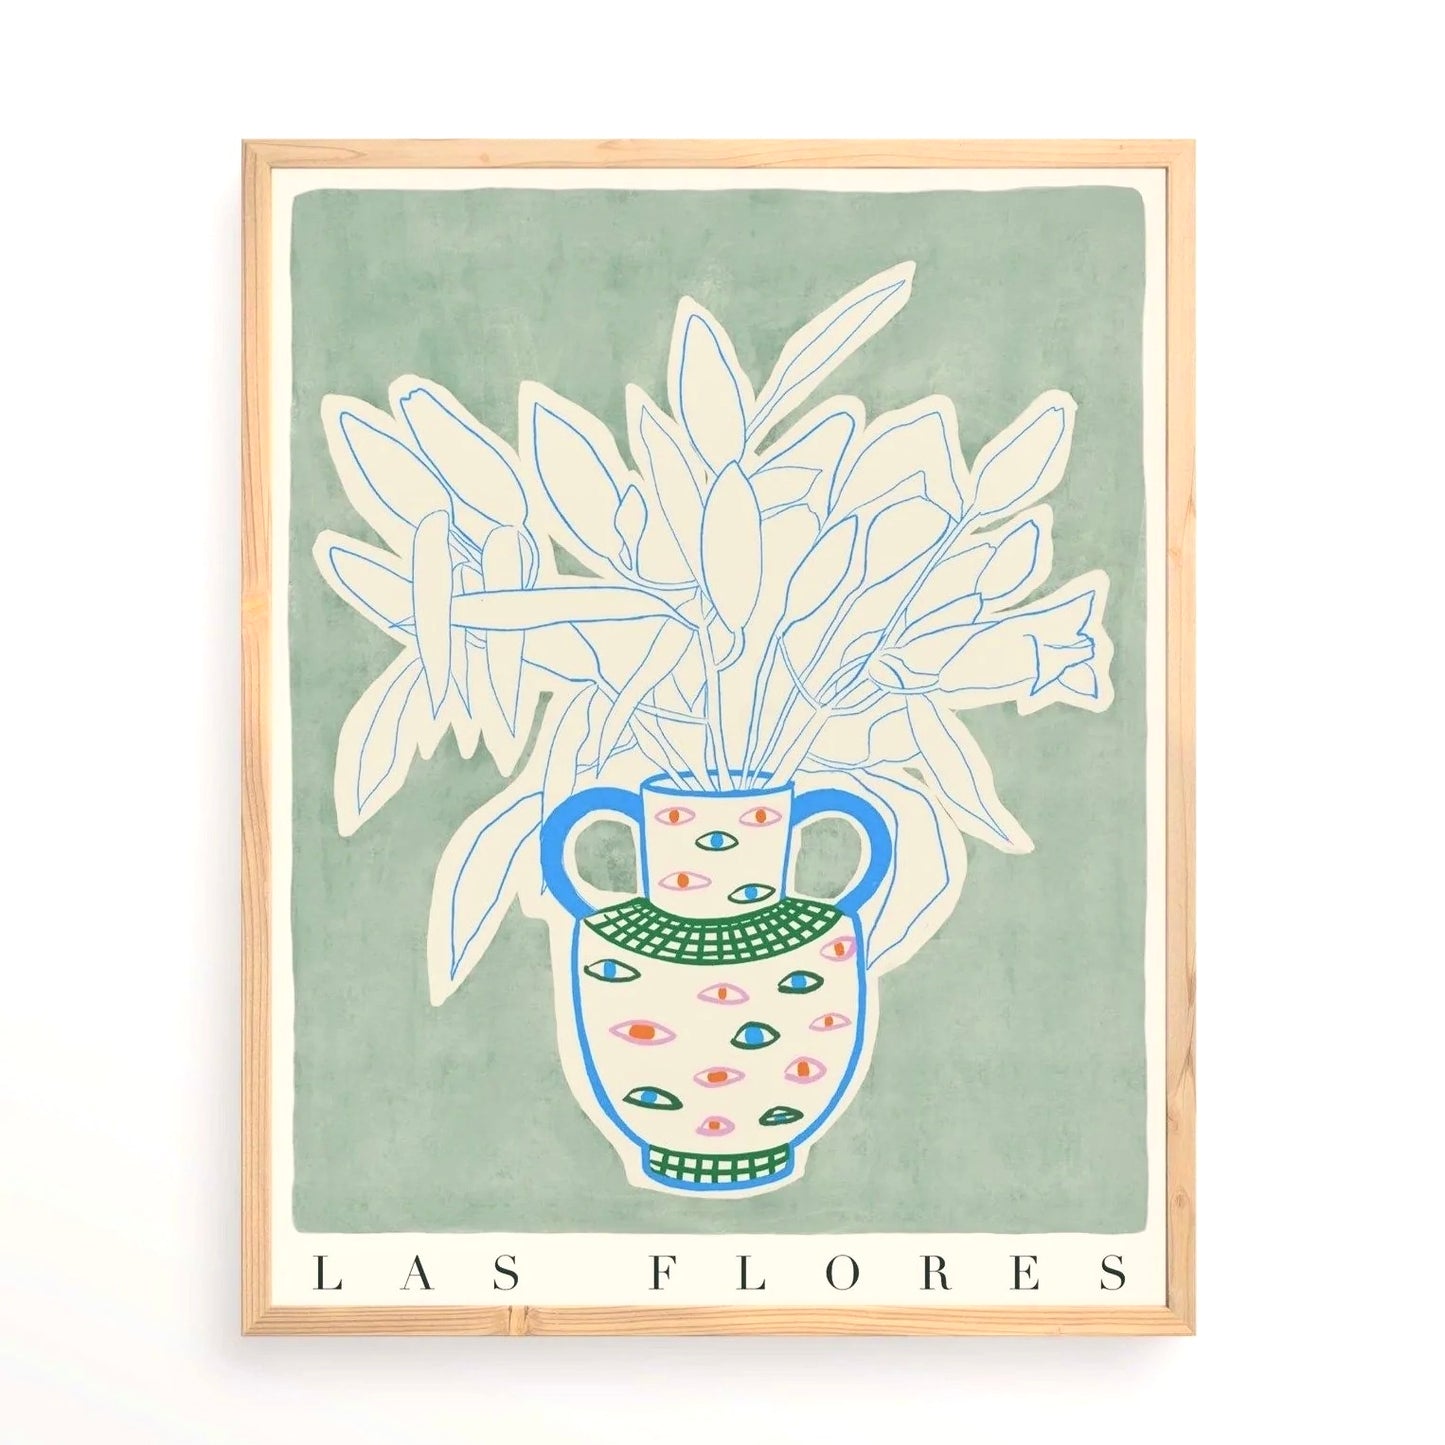 Flores 5 print - THE BRISTOL ARTISAN